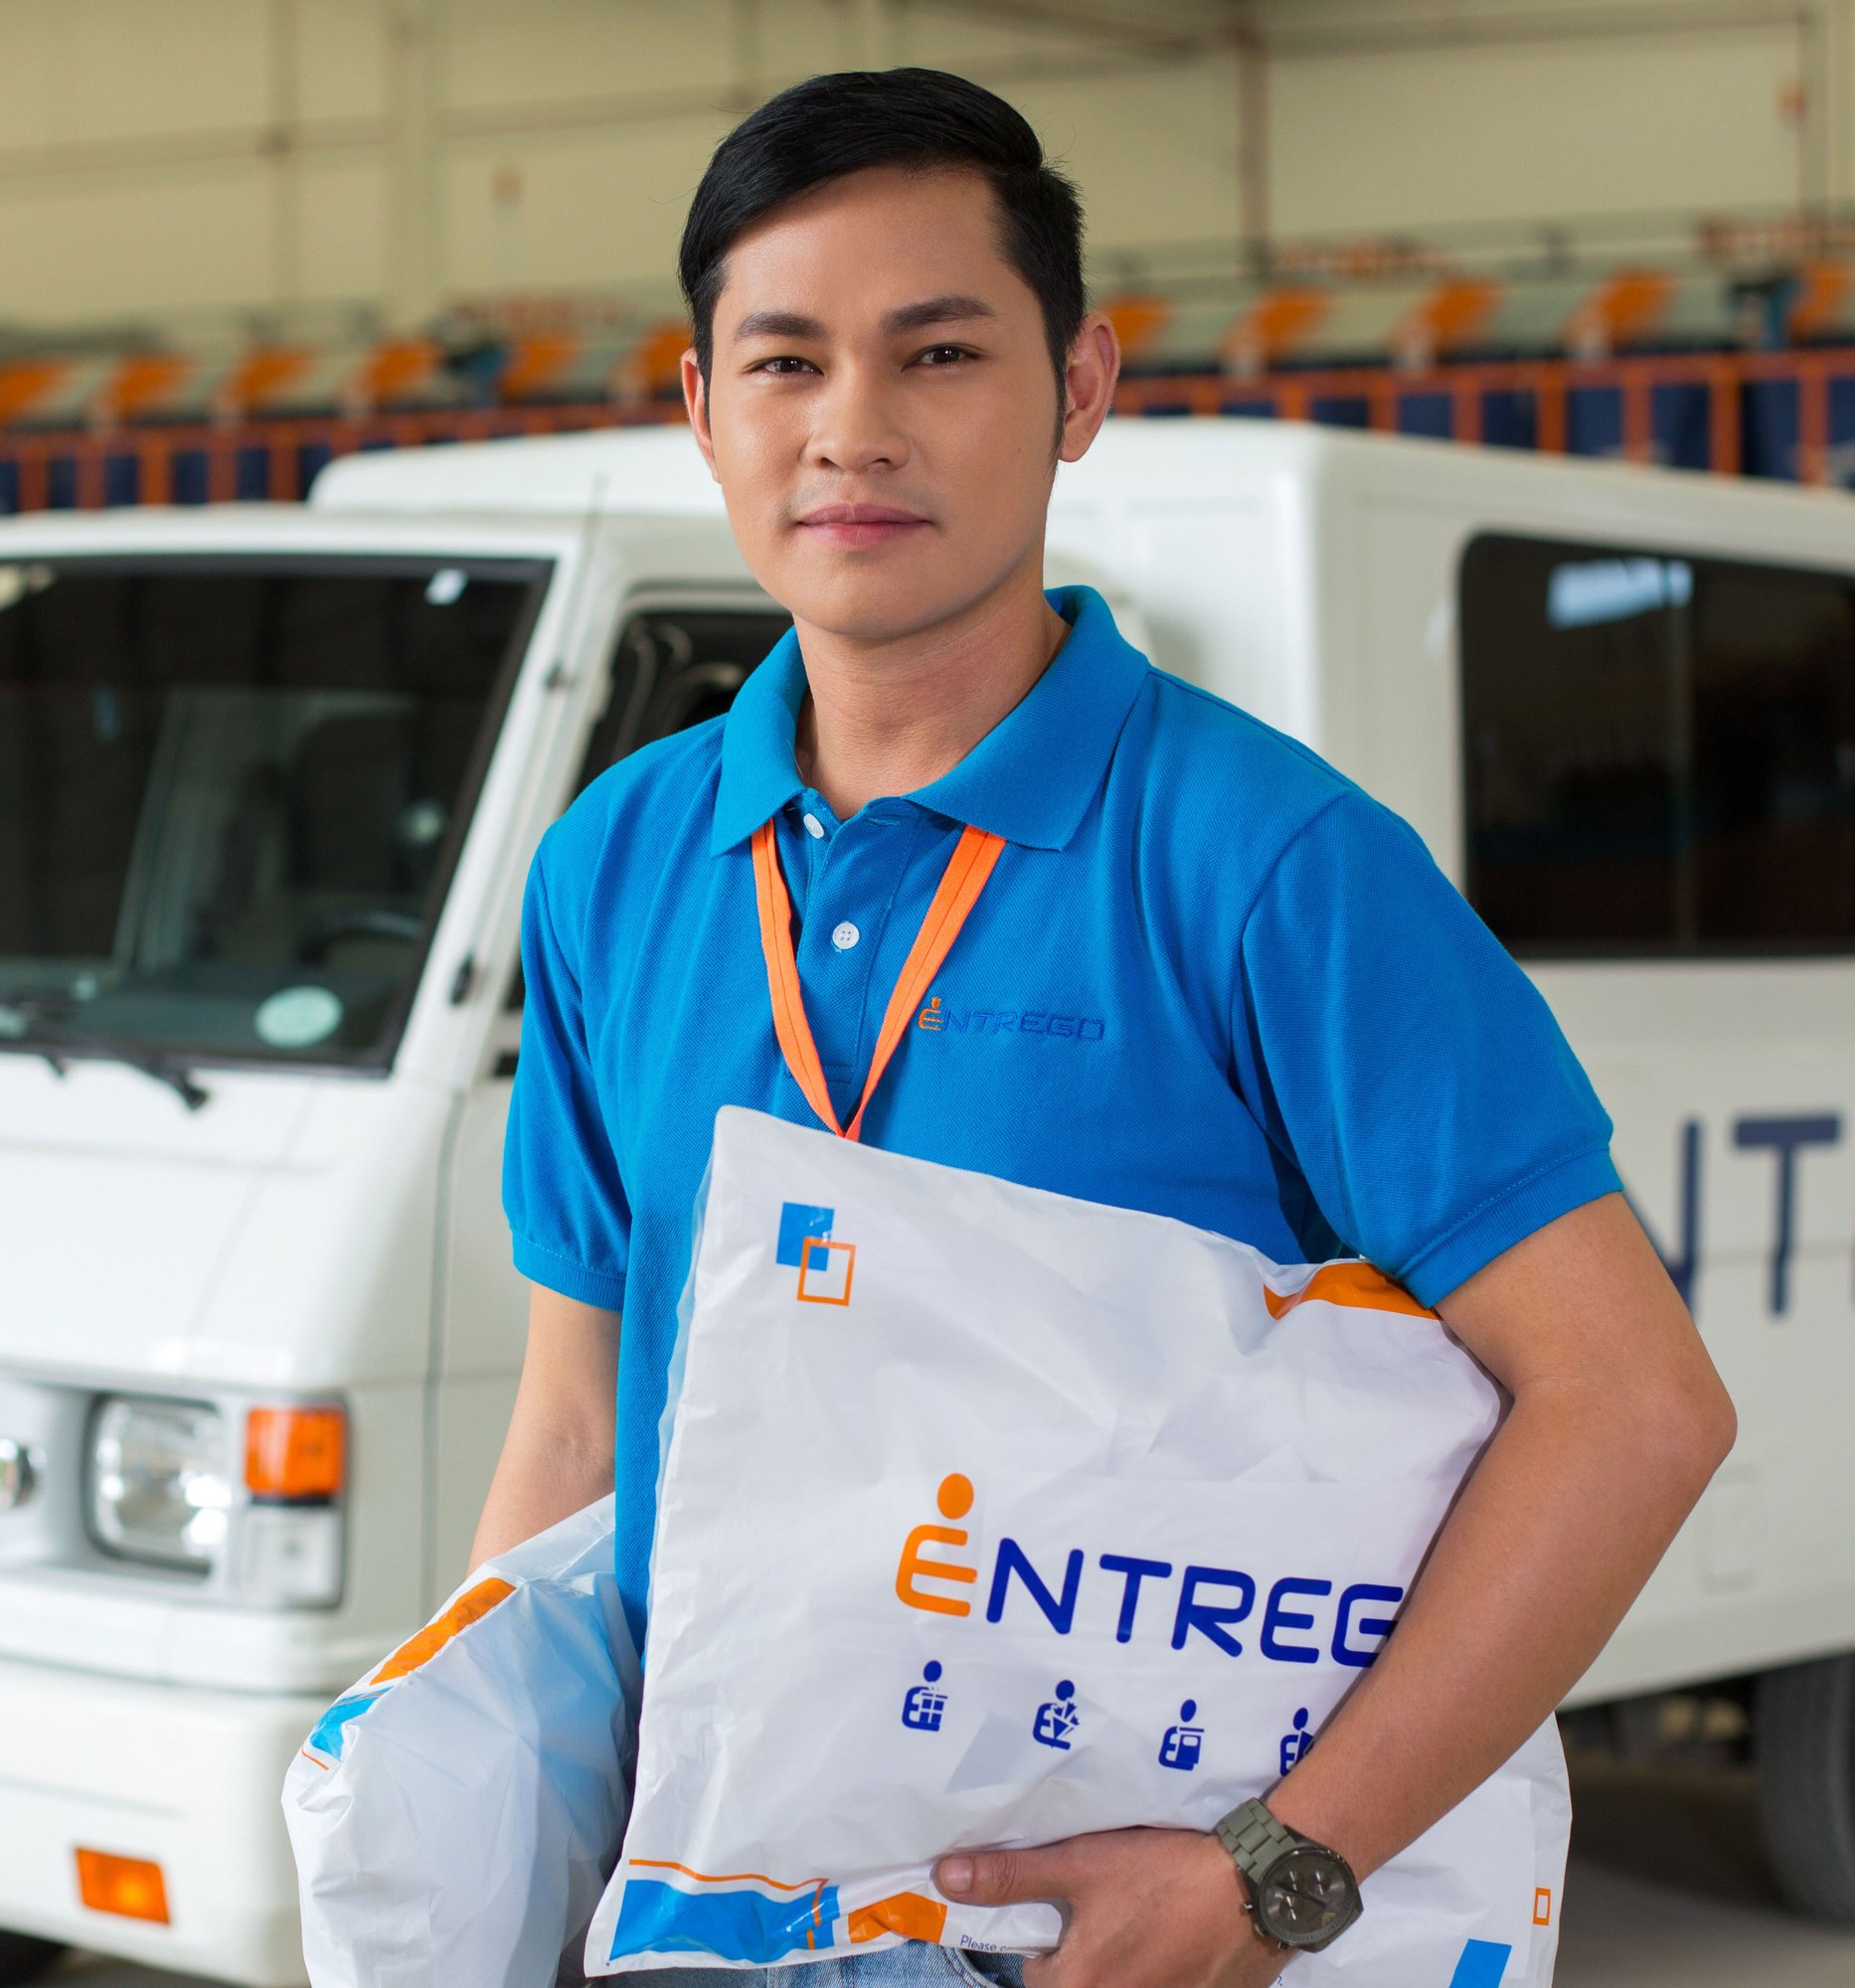 Entrego - Freight Forwarding - Services & Process Hero Image V3